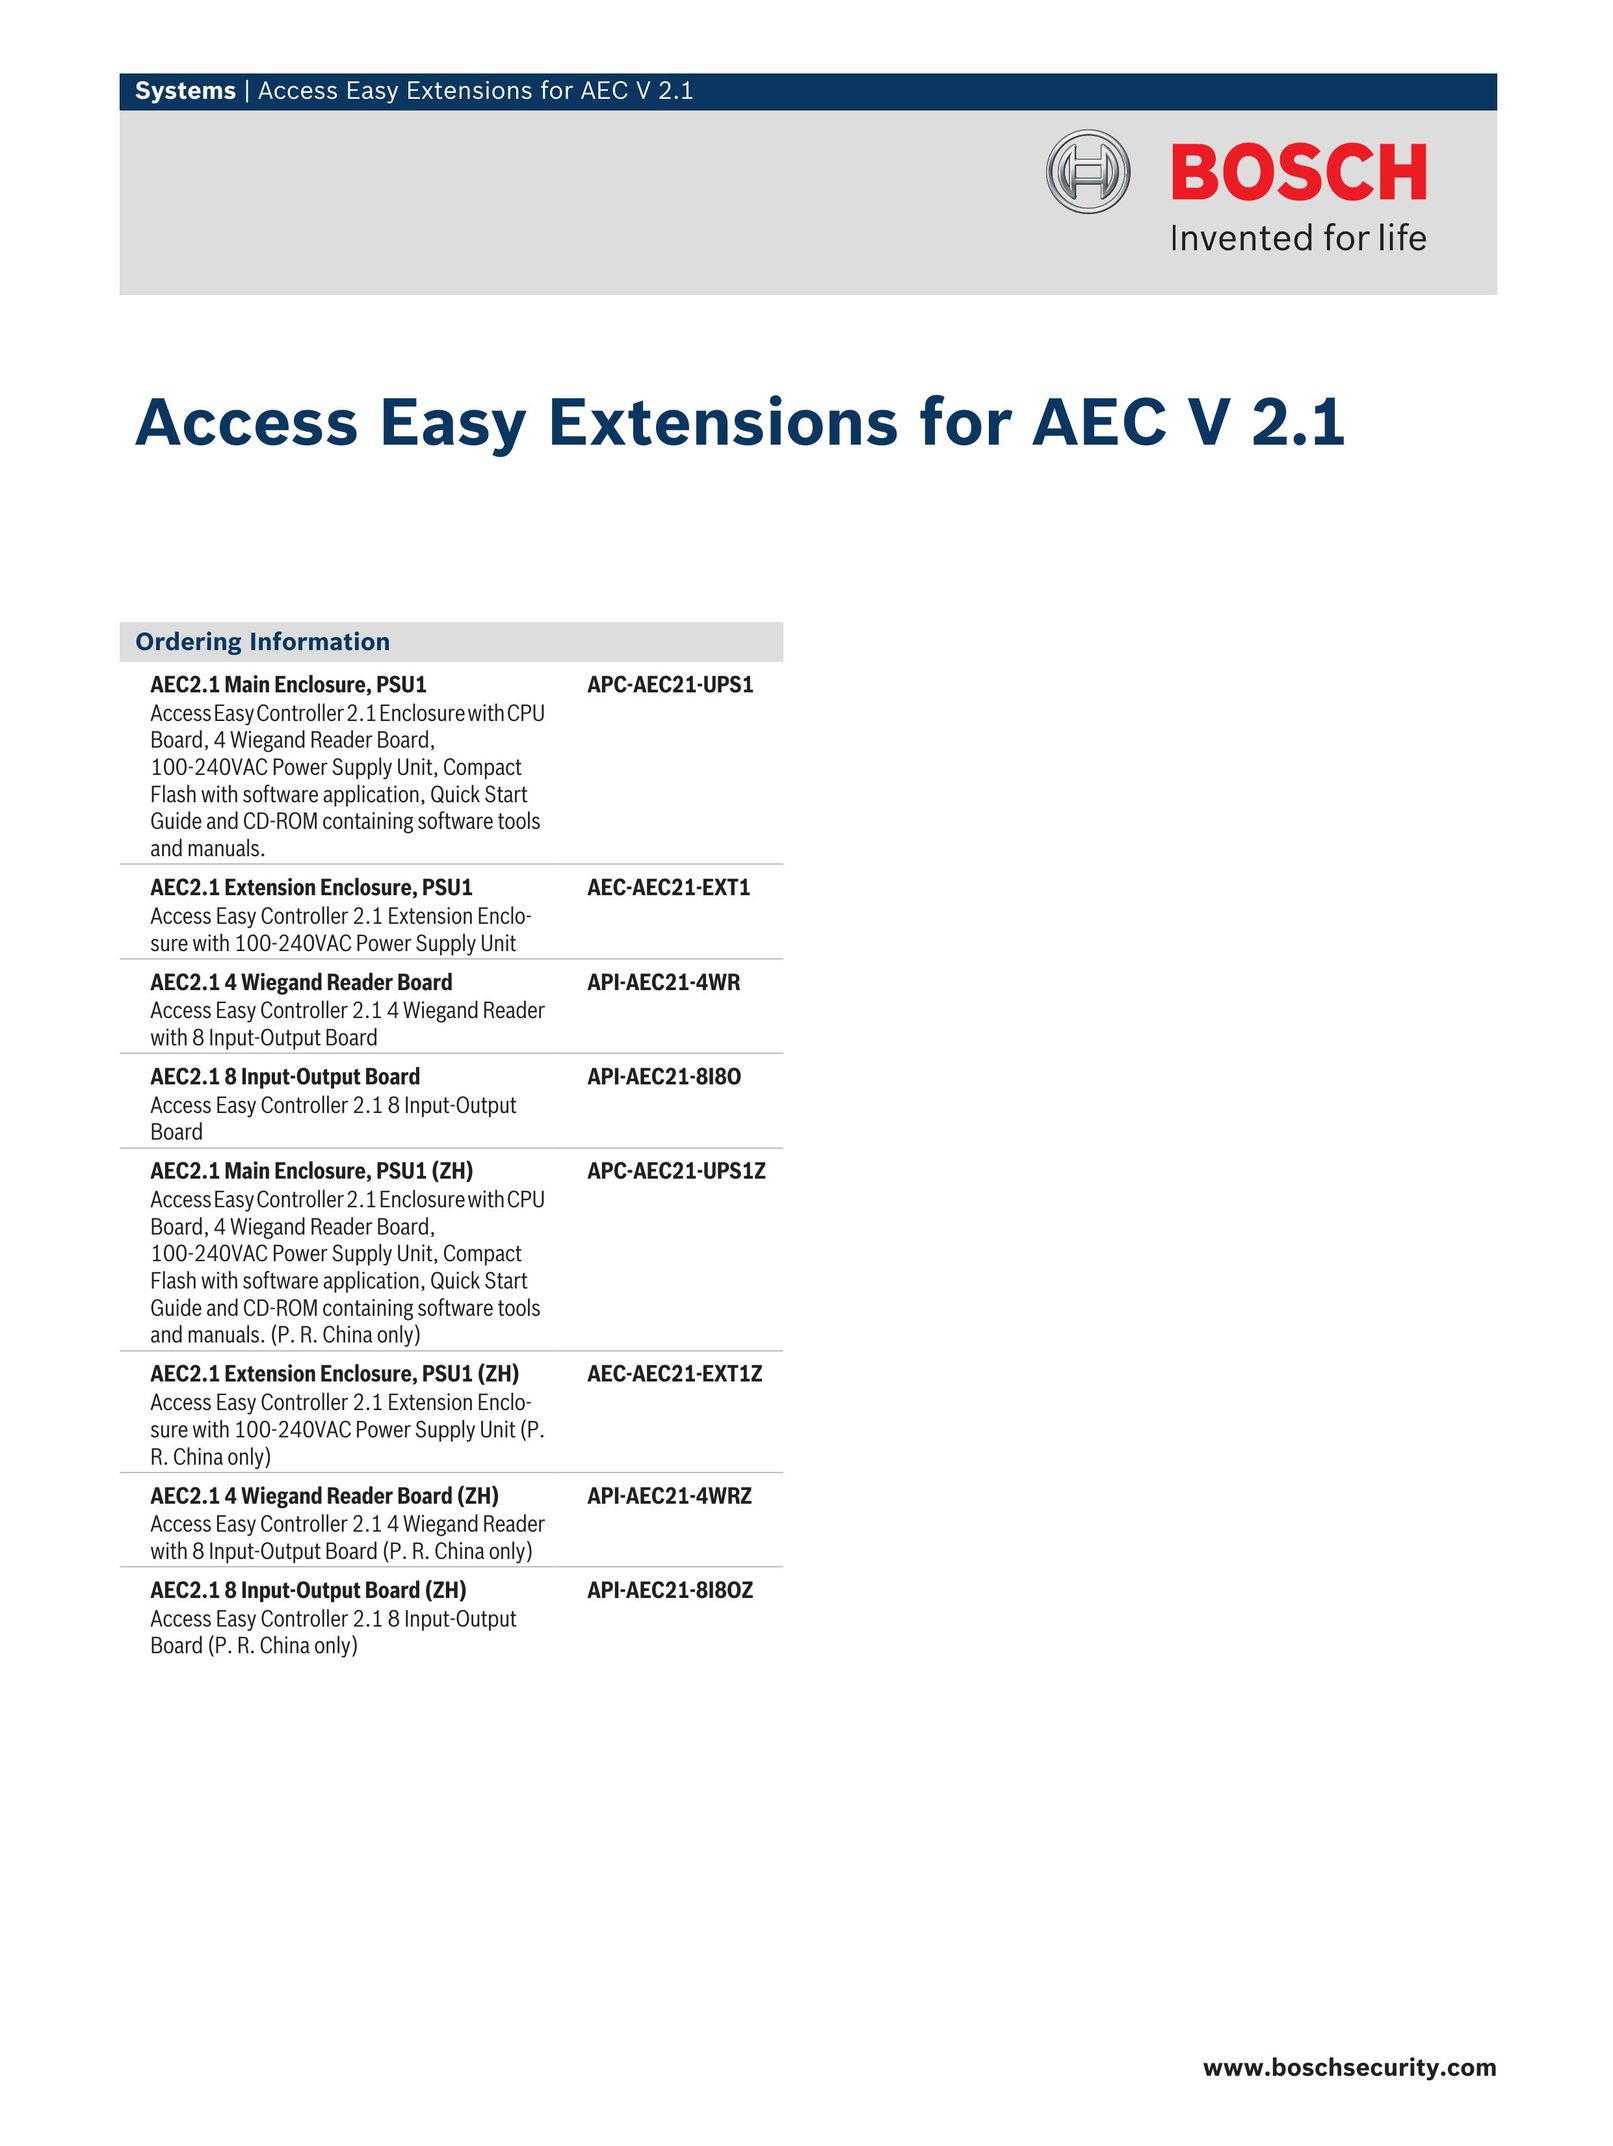 Bosch Appliances AEC-AEC21-EXT1 Home Security System User Manual